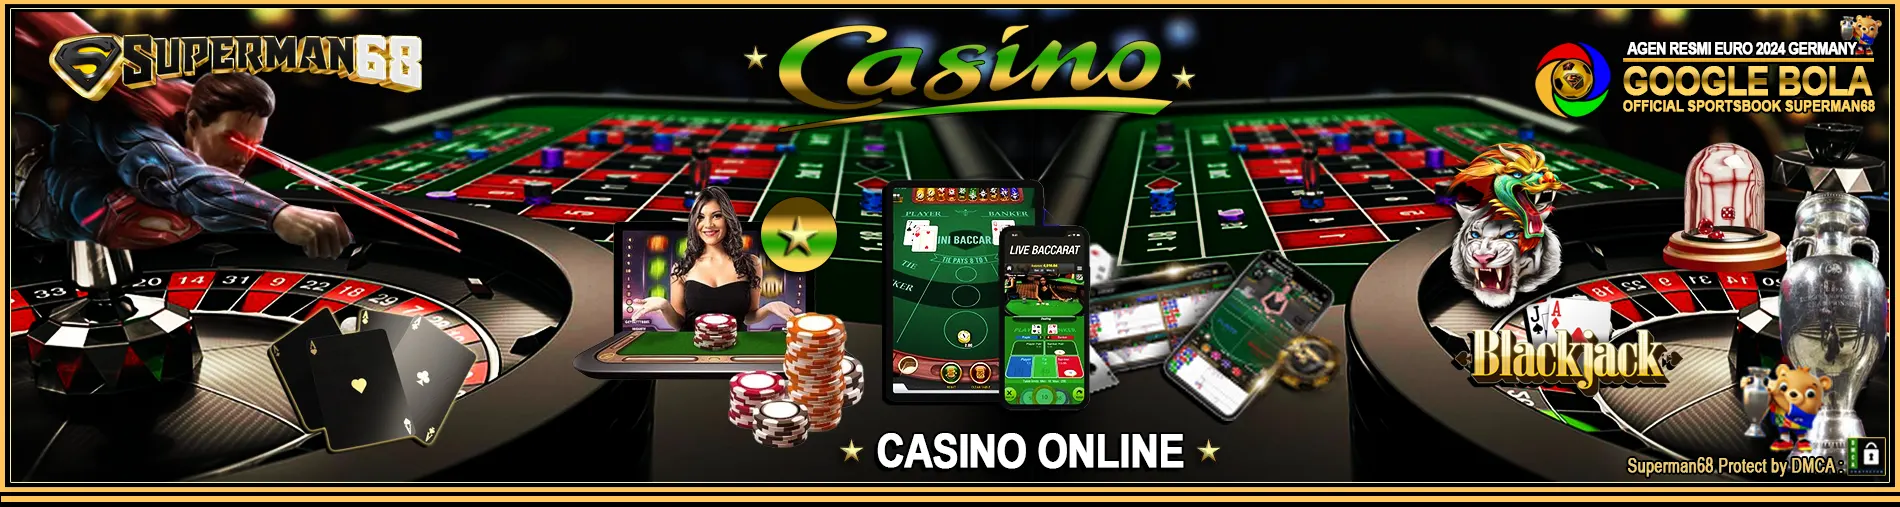 superman68 casino online